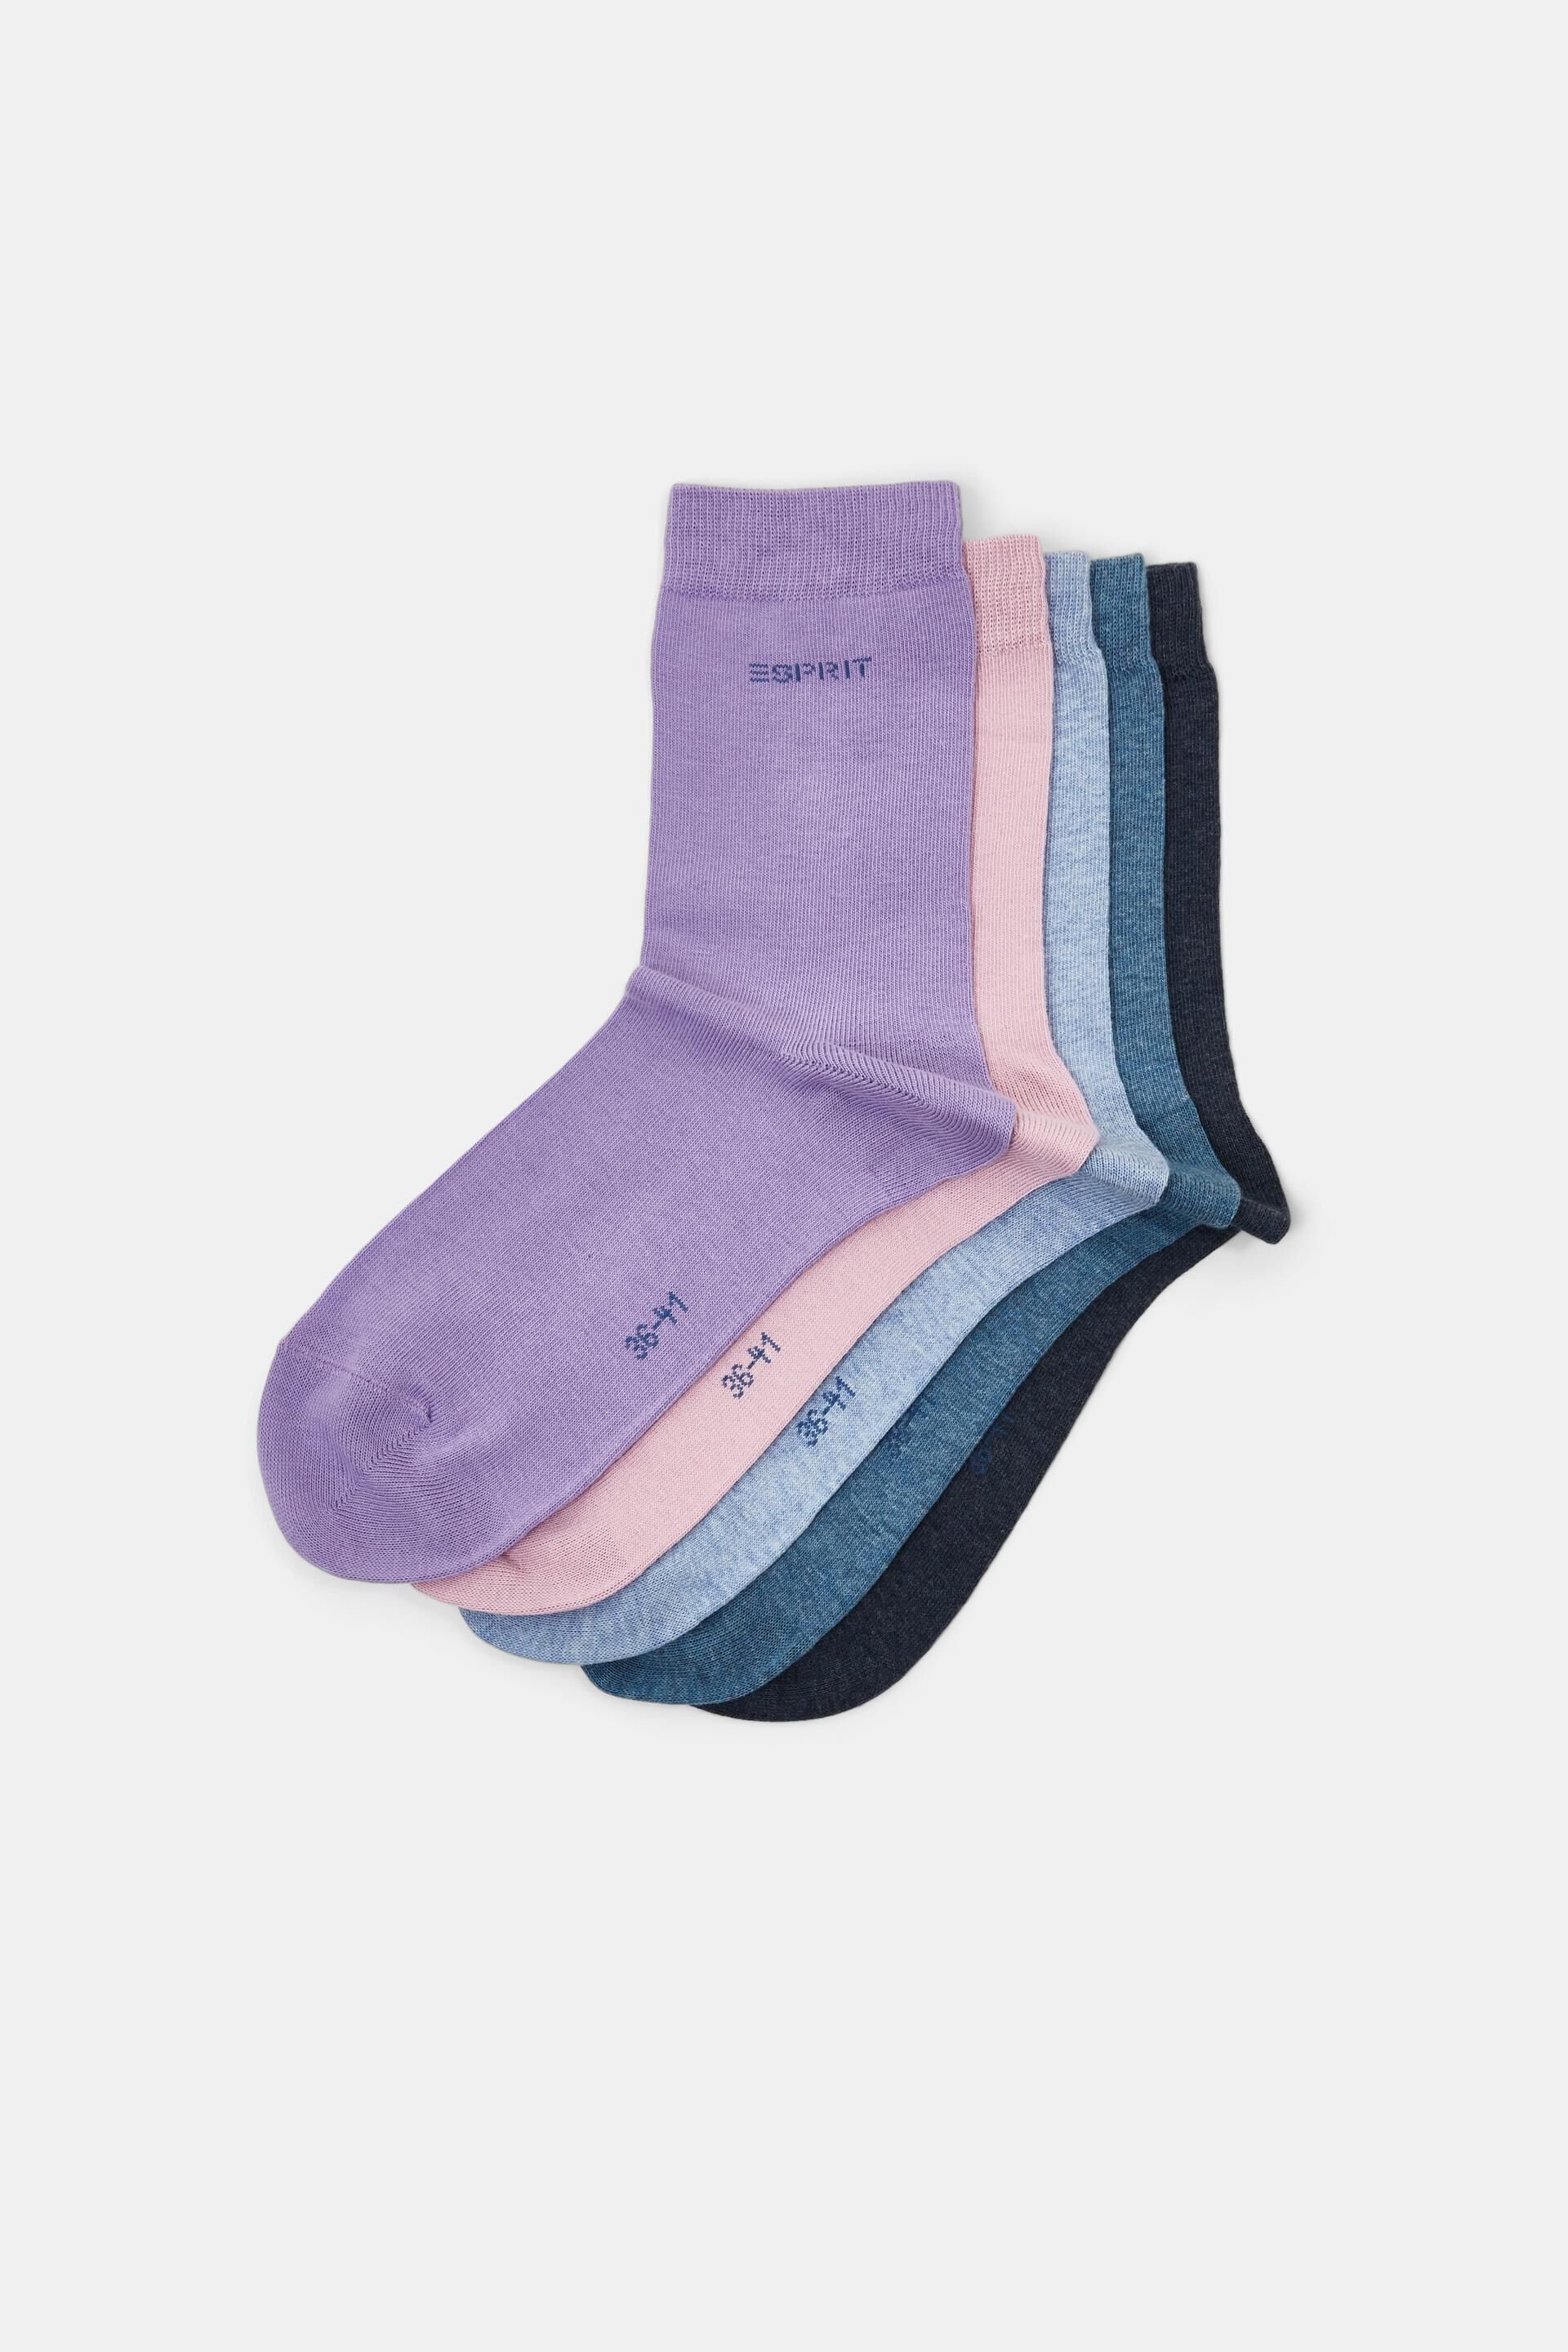 Esprit organic 5-pack of socks, cotton